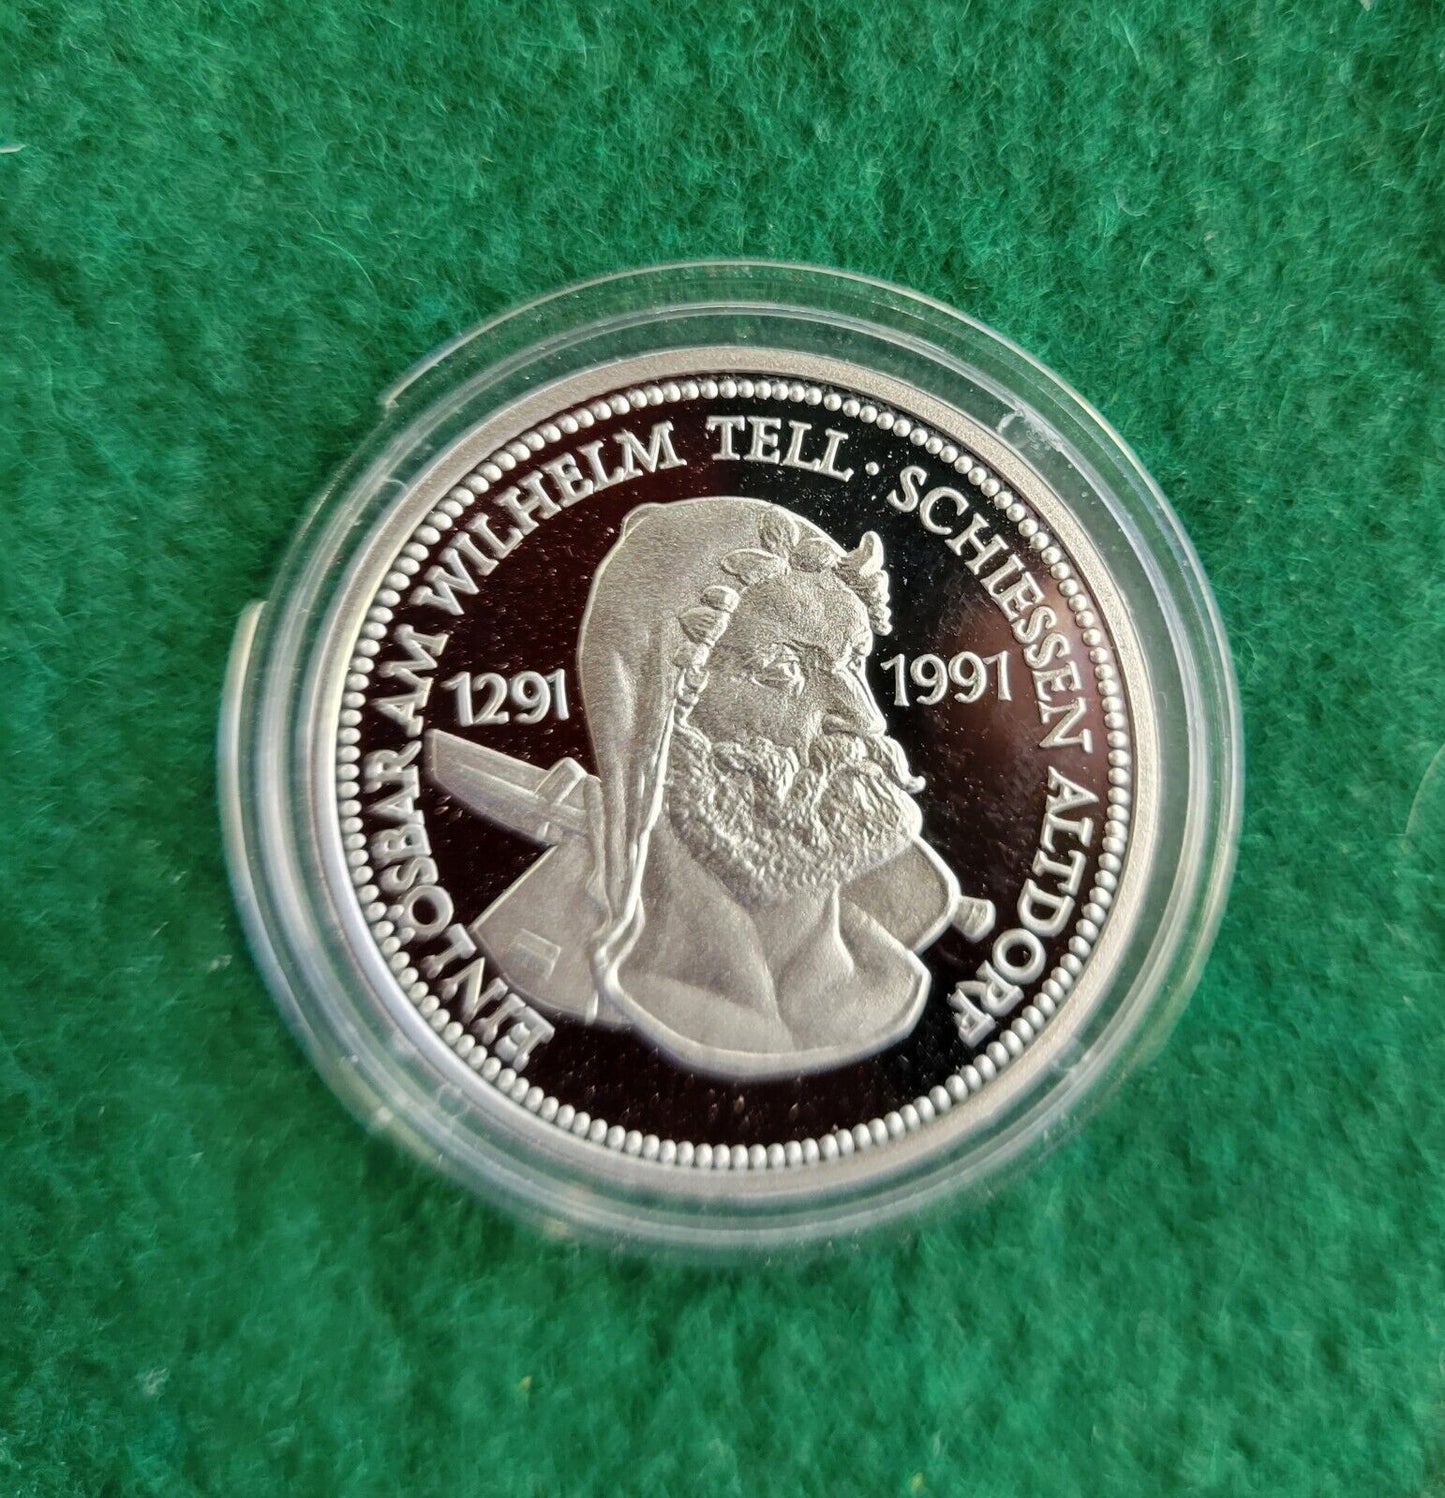 1988 1oz Platinum Proof Switzerland Shooting  Taler .999 Fine Vintage Coin